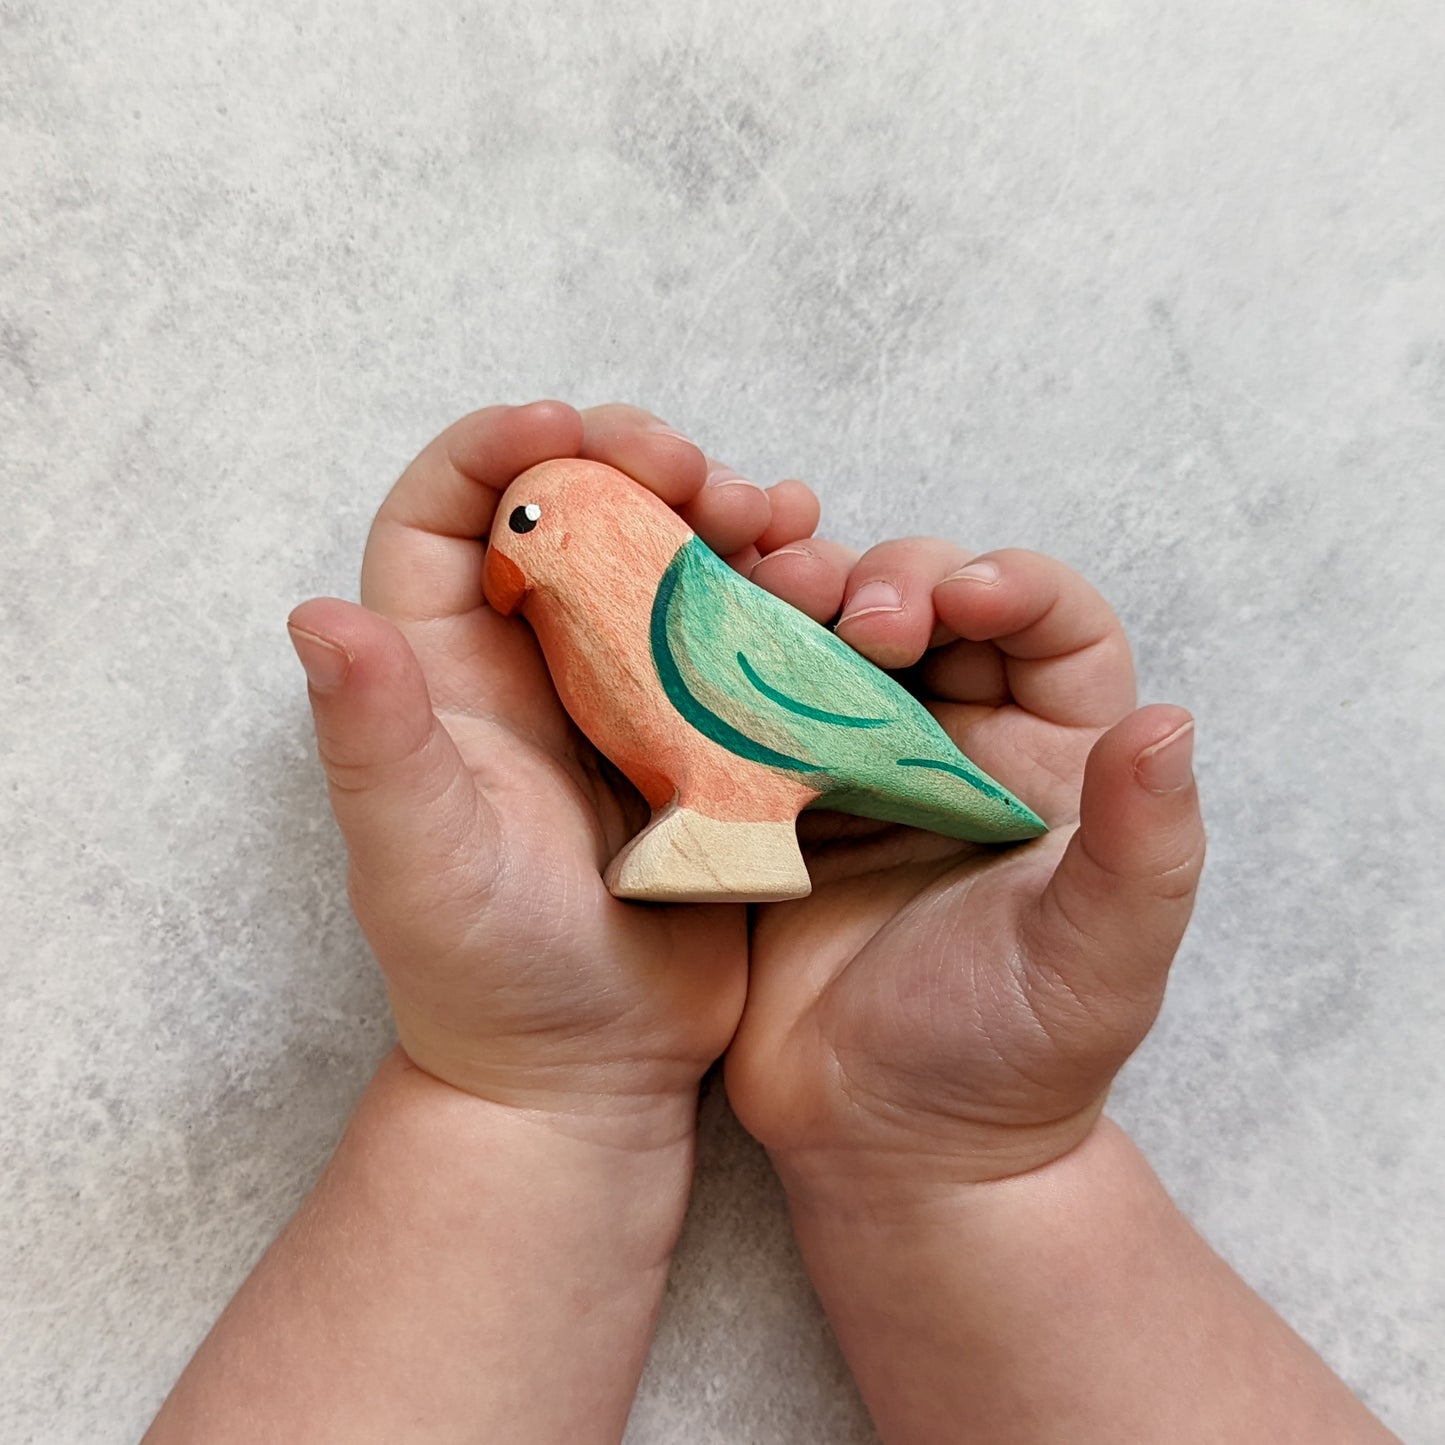 Australian Birds - Wooden Toy Set